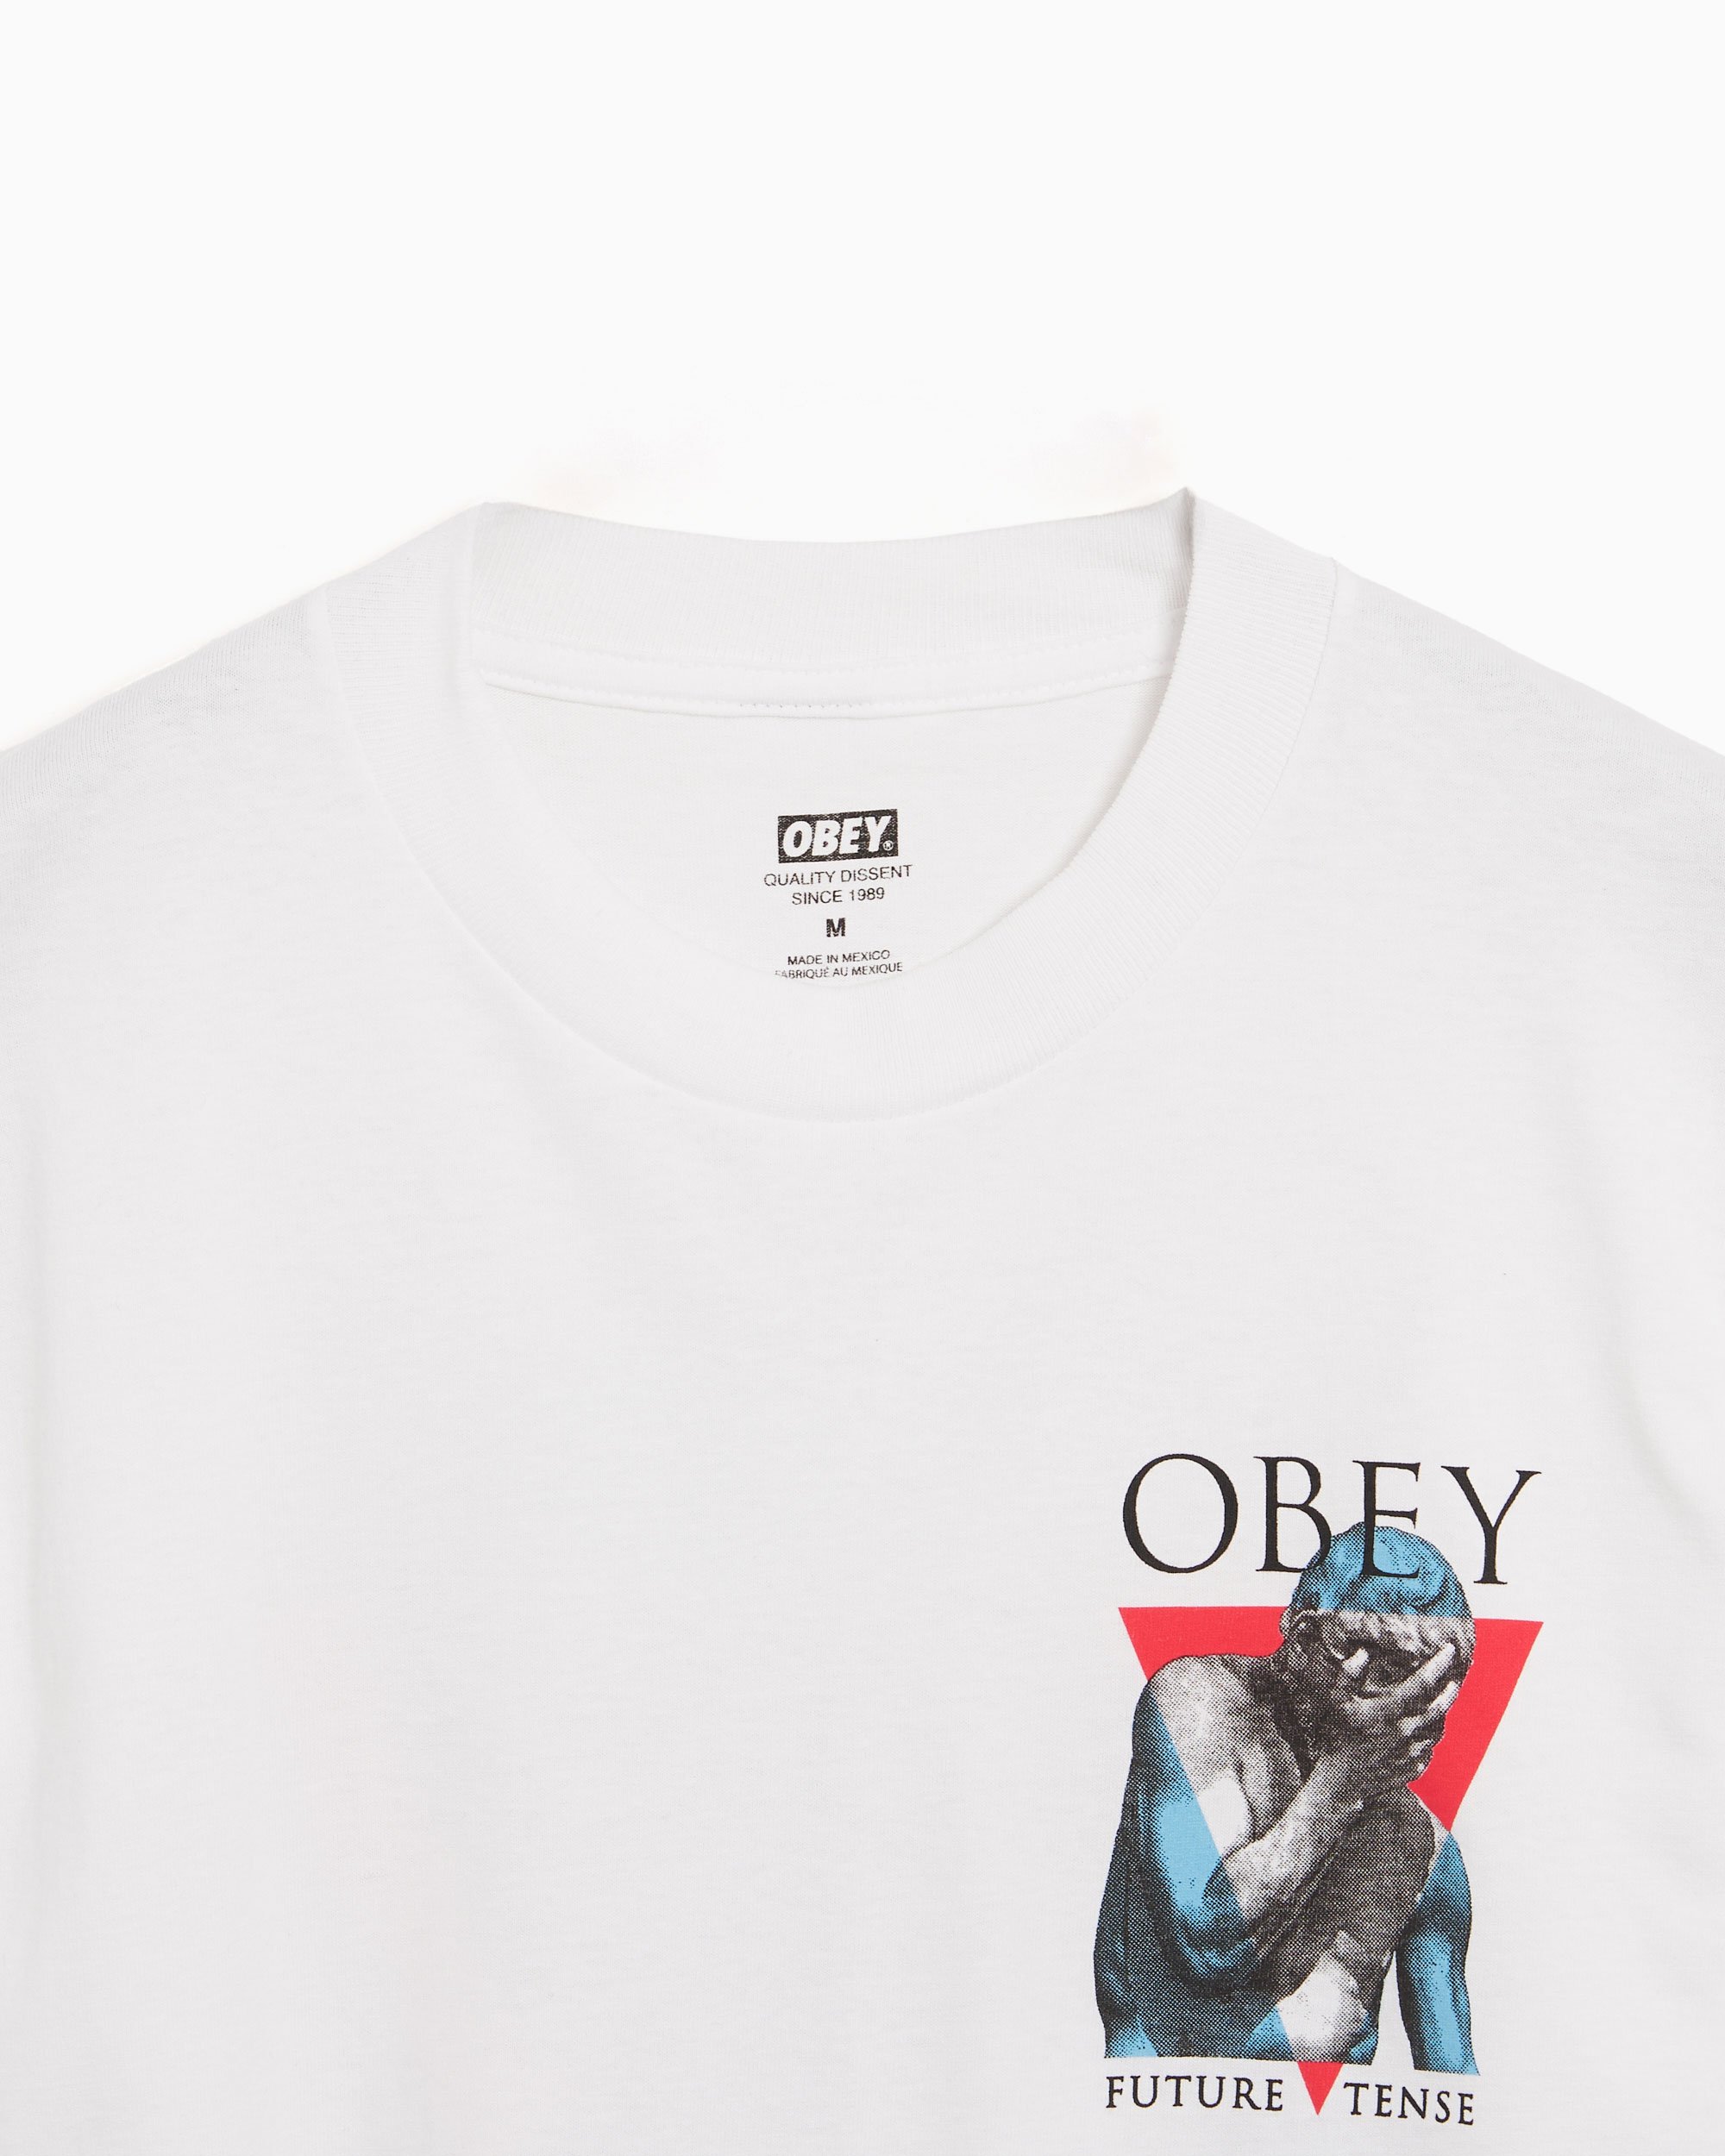 OBEY Clothing Obey Future Tense Men's T-Shirt White 165263778-WHT 